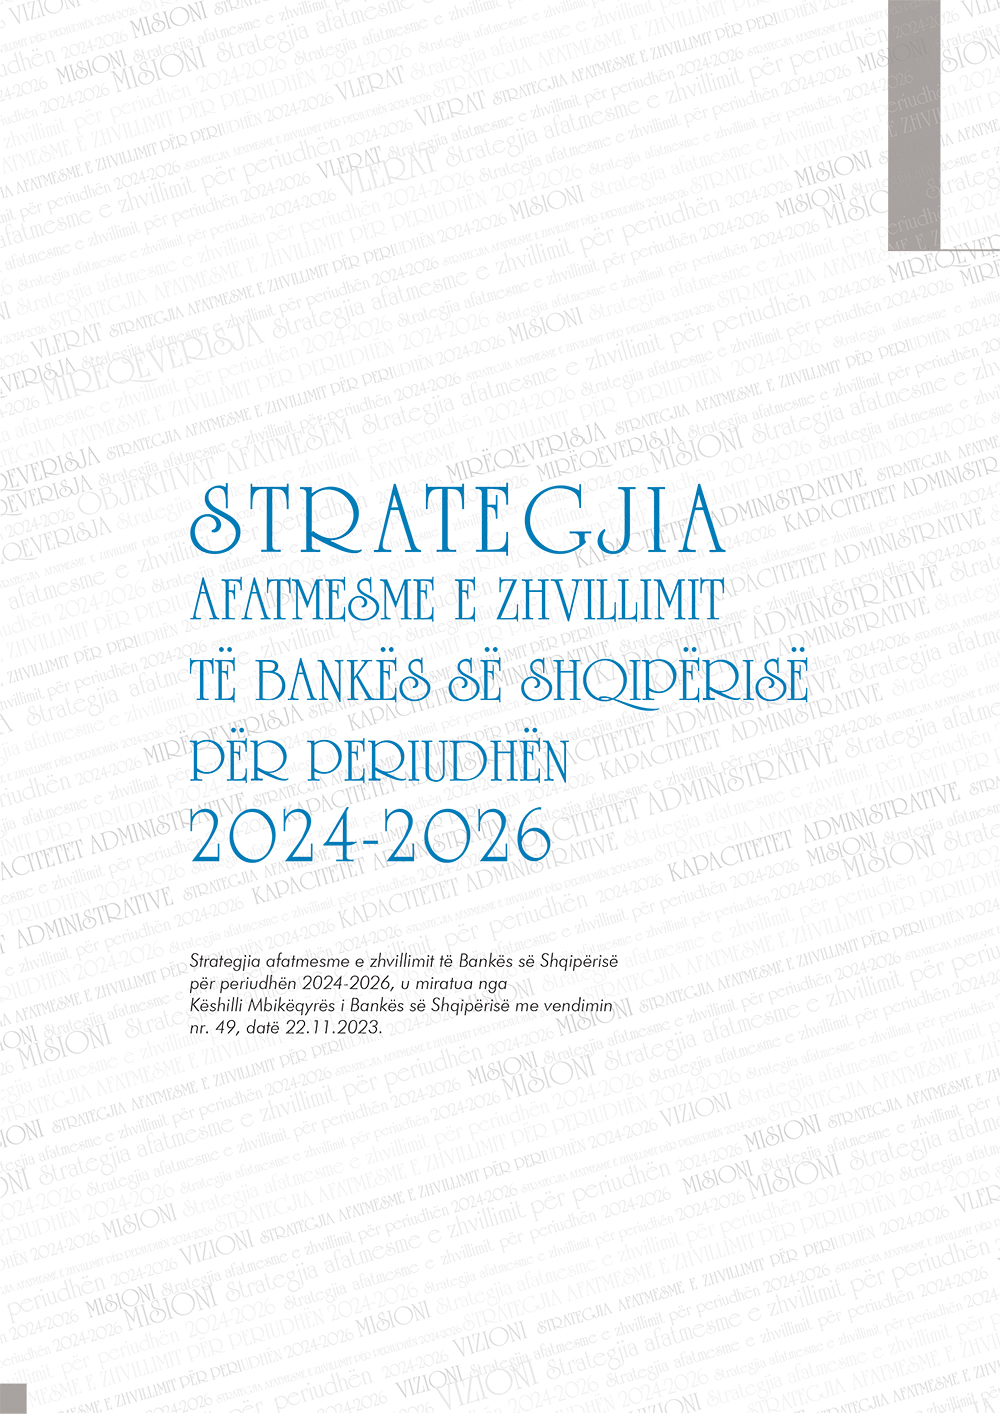 The “Medium-term development strategy of the Bank of Albania 2024-2026”